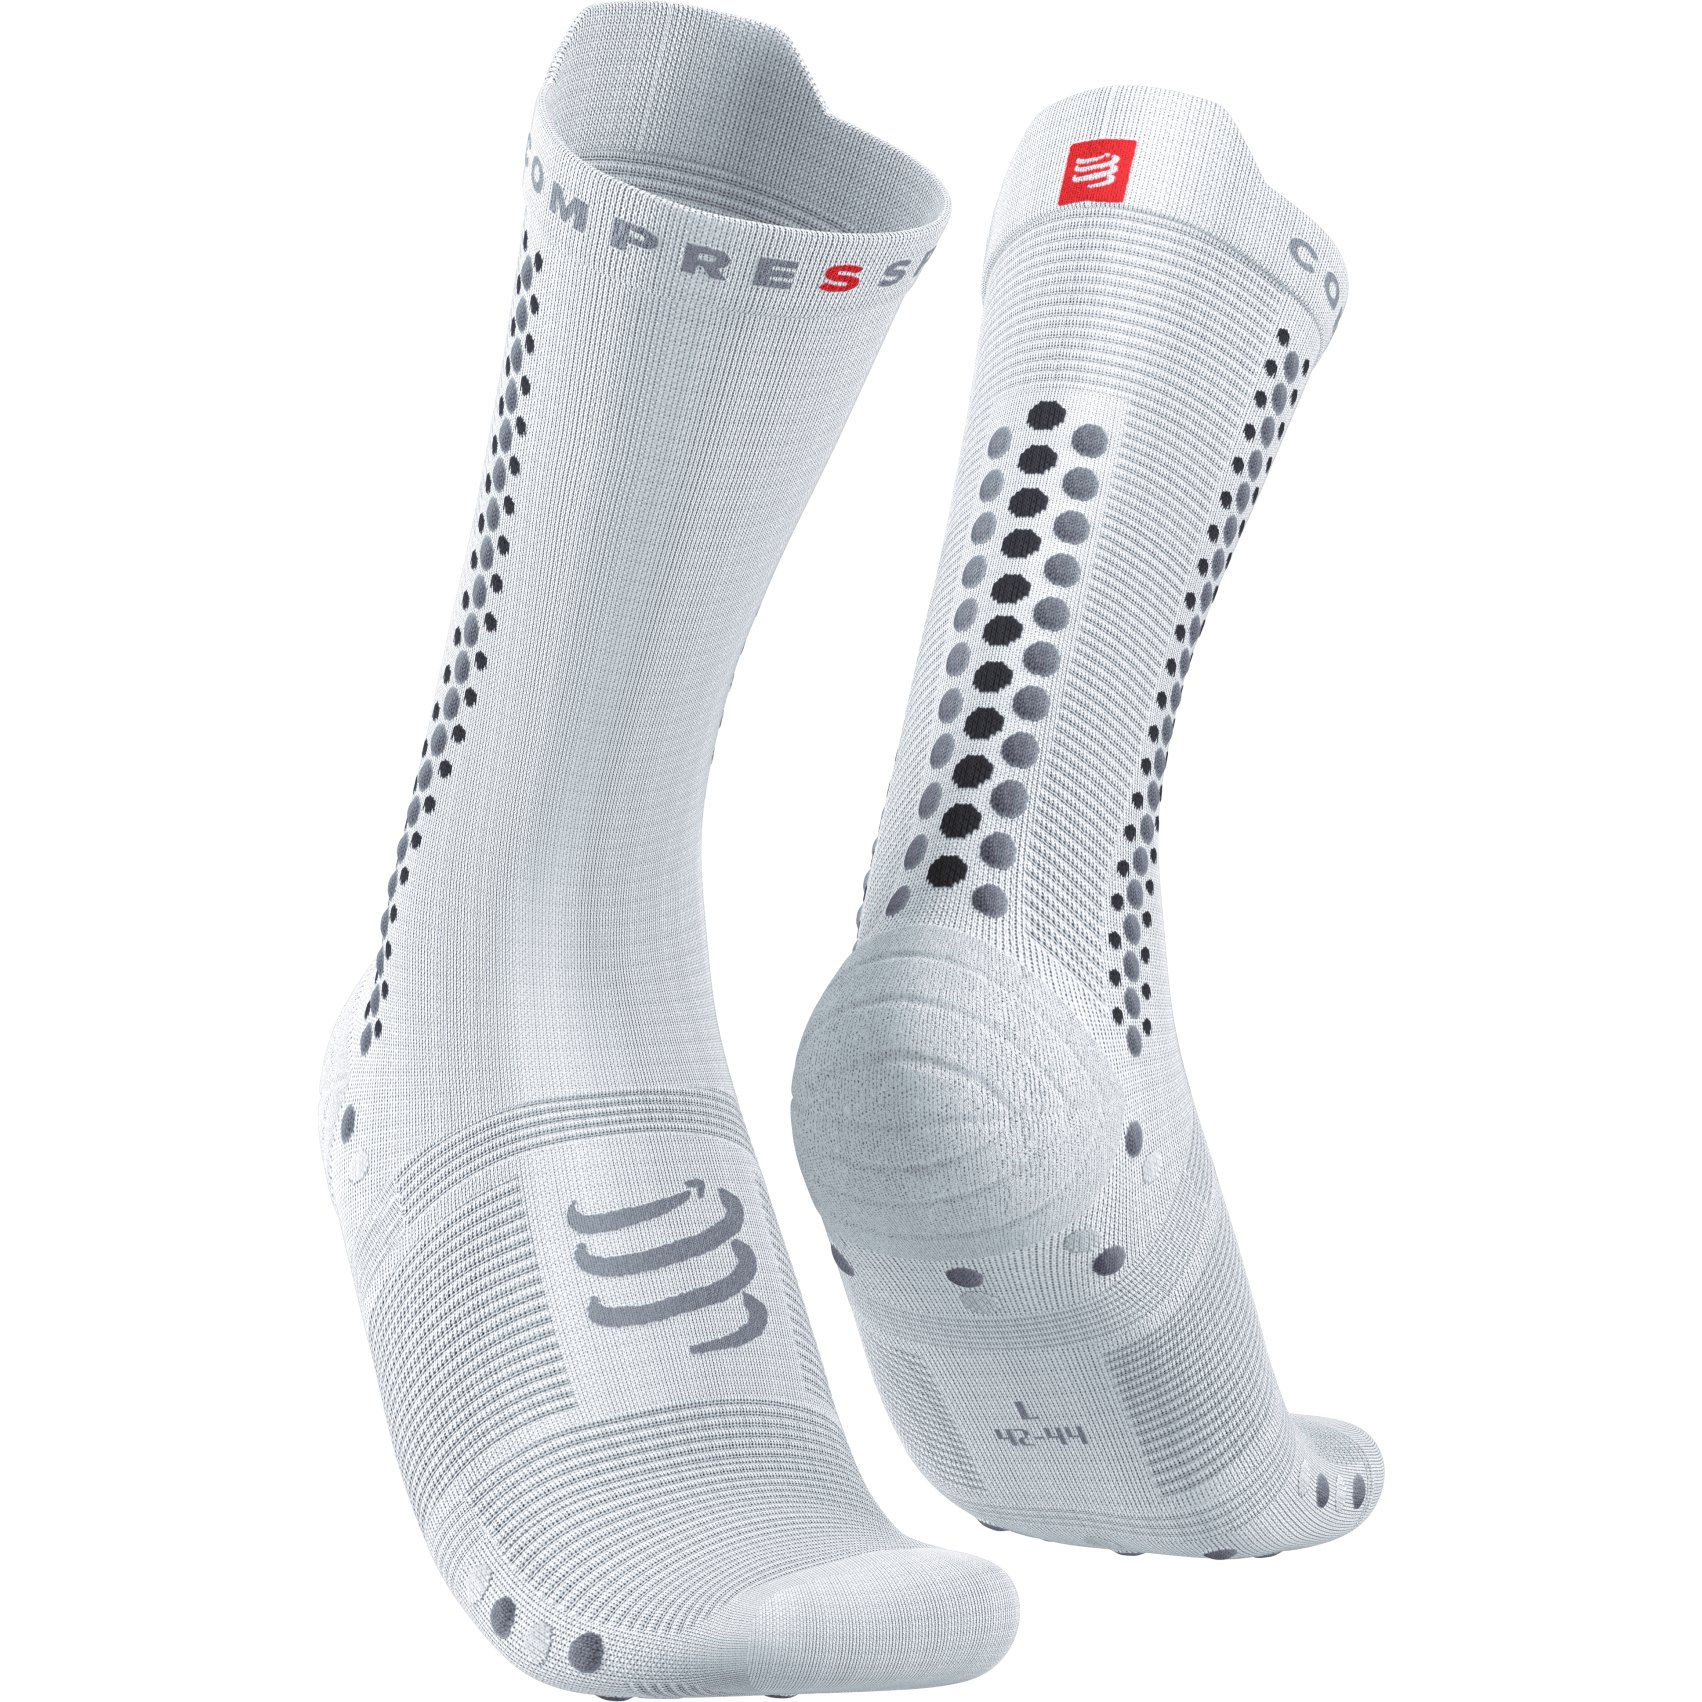 Image of Compressport Pro Racing Compression Socks v4.0 Bike - white/alloy